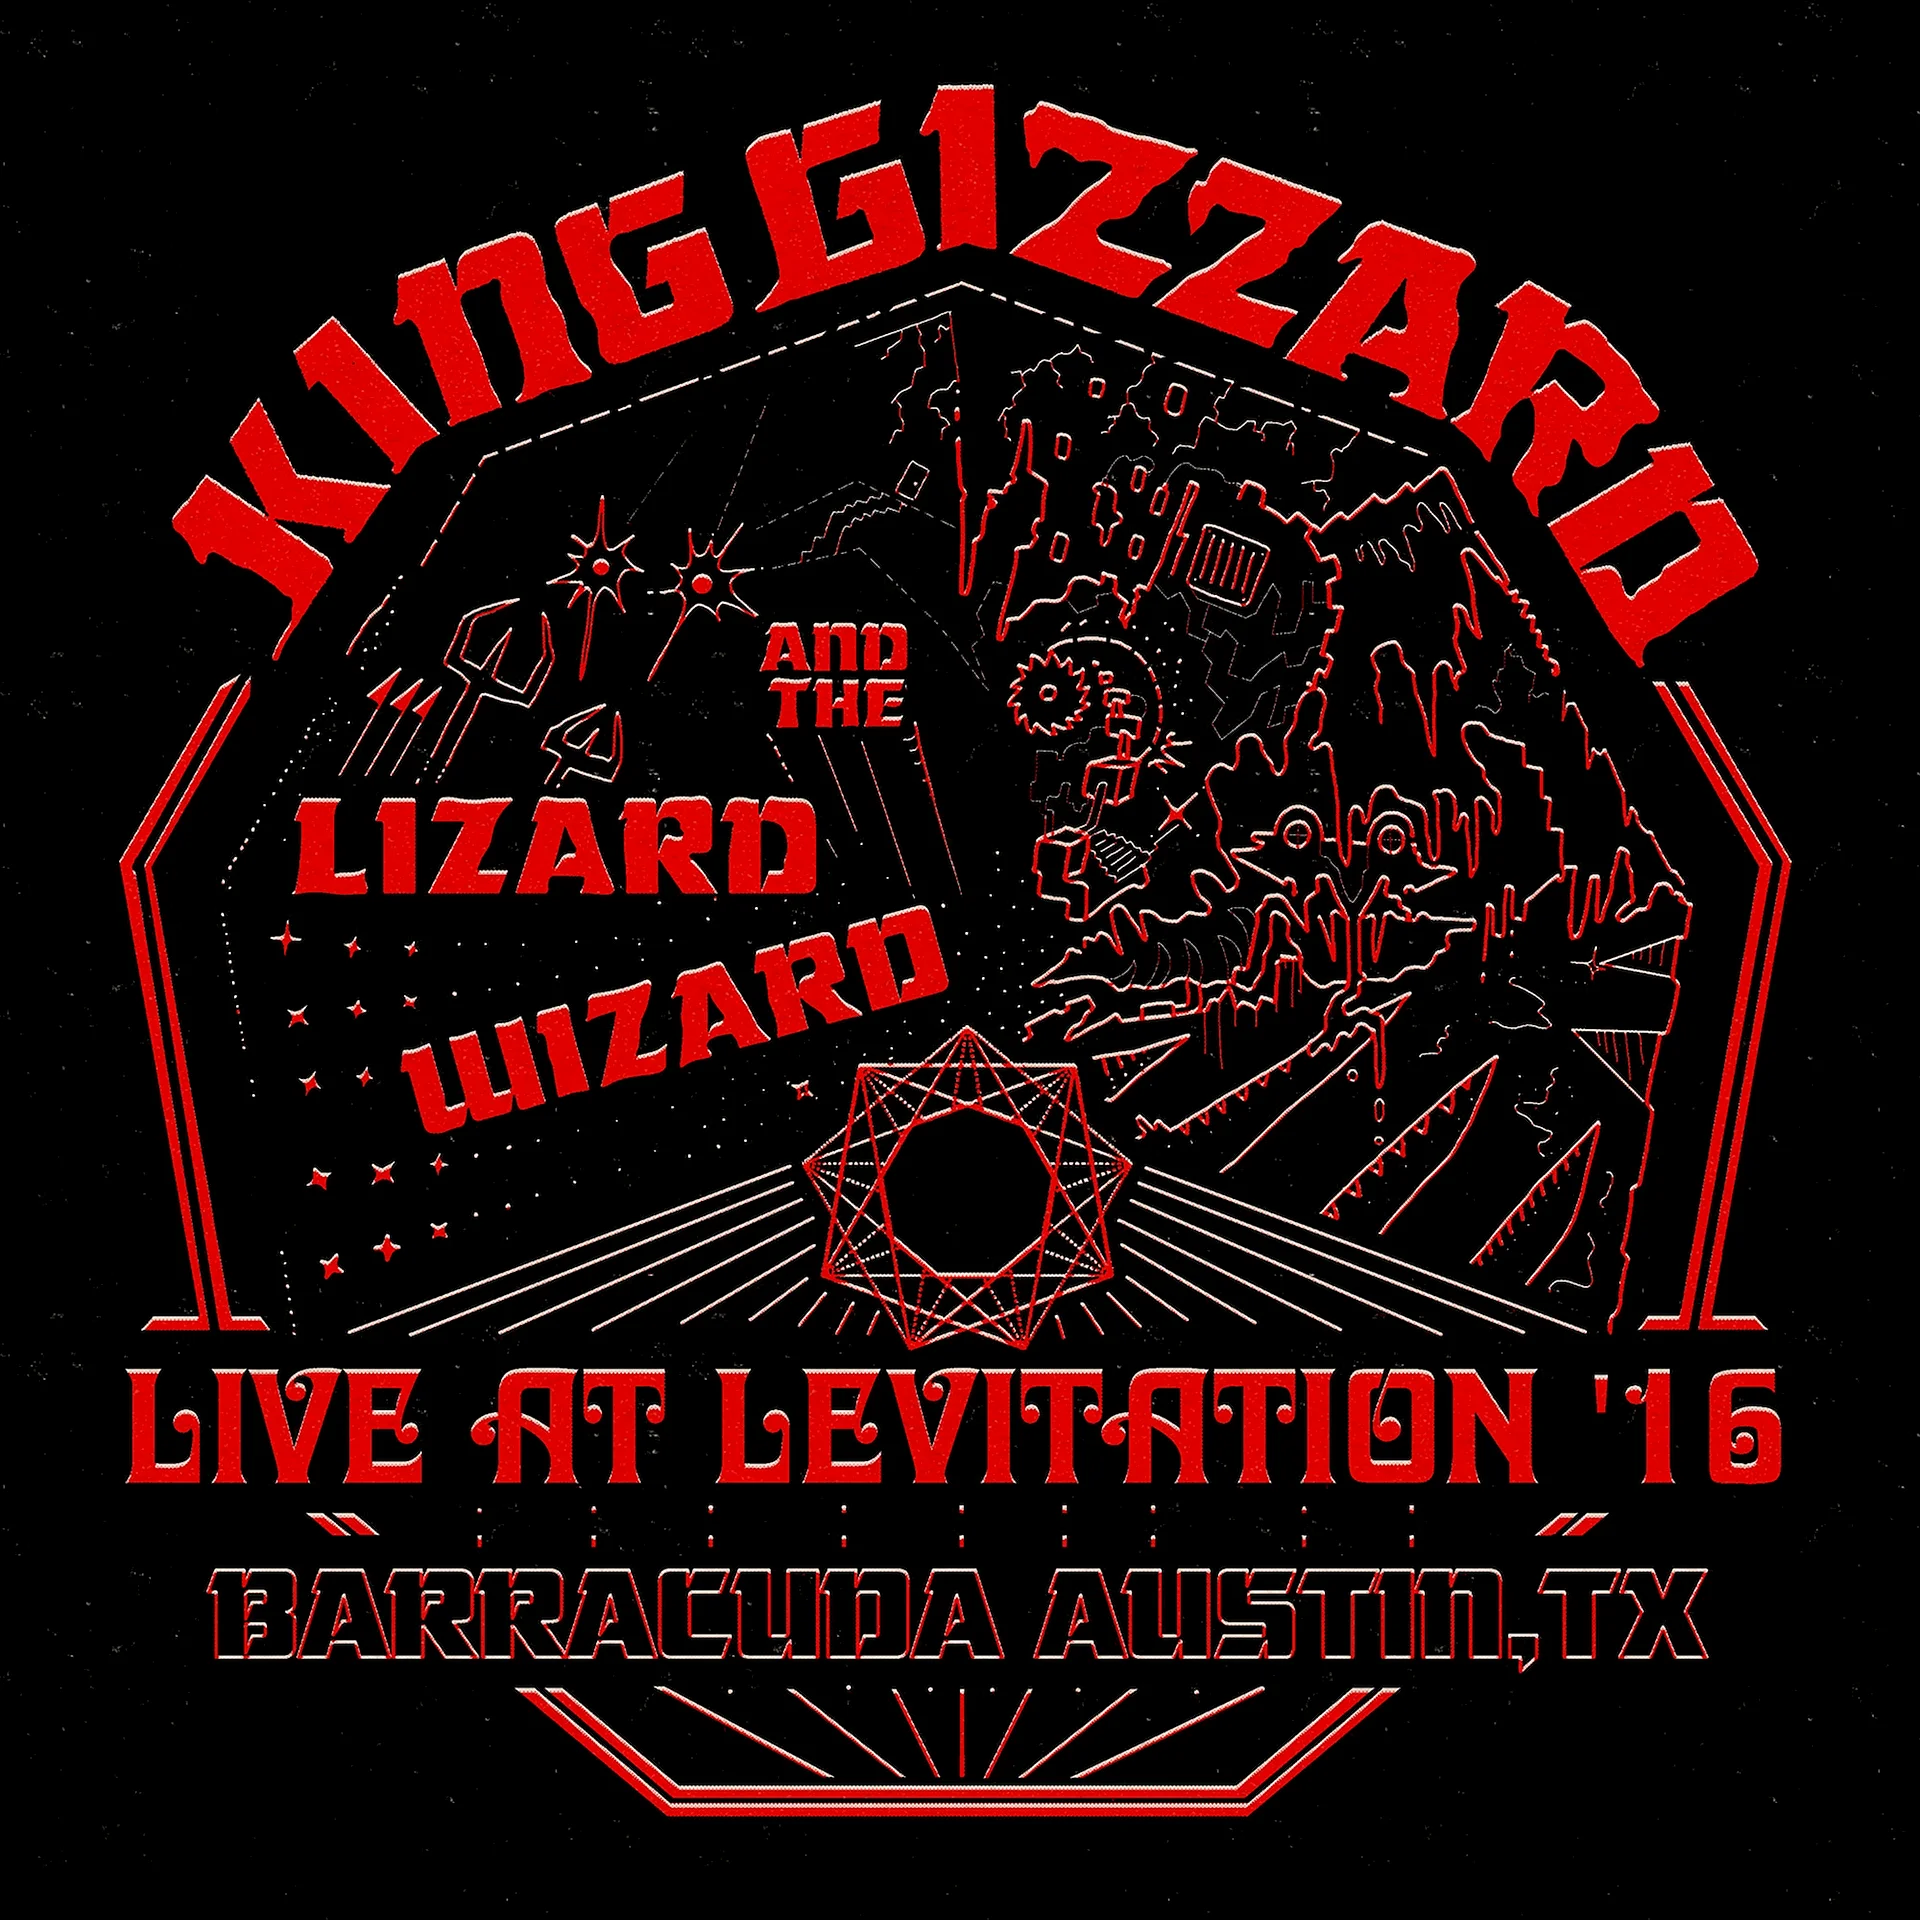 King Gizzard & The Lizard Wizard - Live In San Francisco 16 Wallpaper